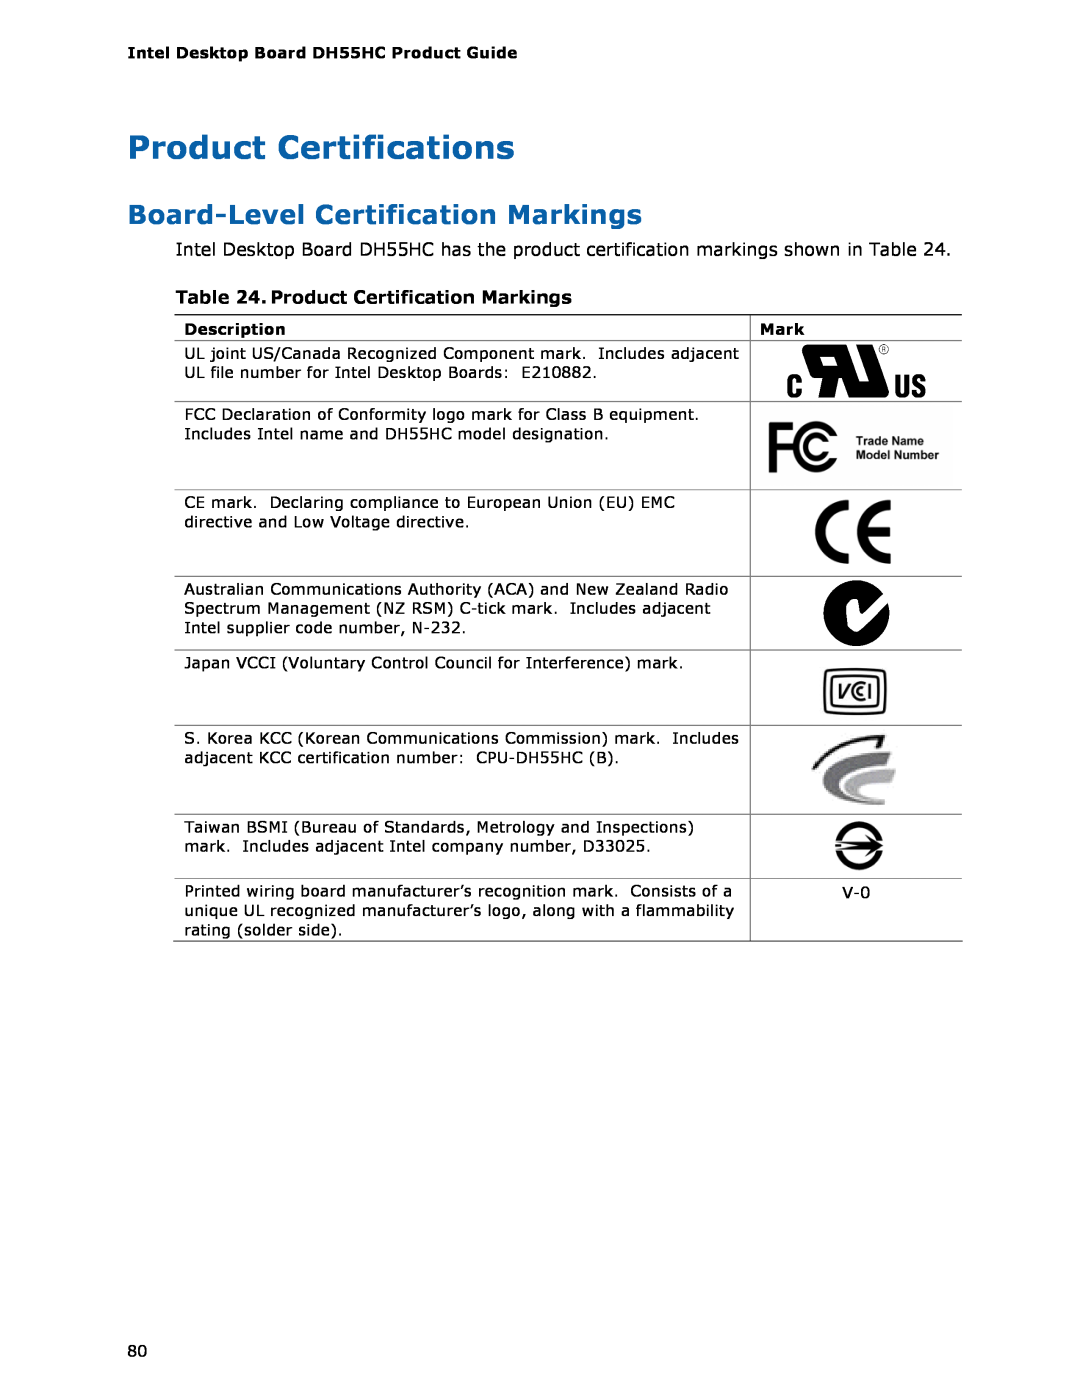 Intel BOXDH55HC manual Product Certifications, Board-Level Certification Markings, Product Certification Markings 